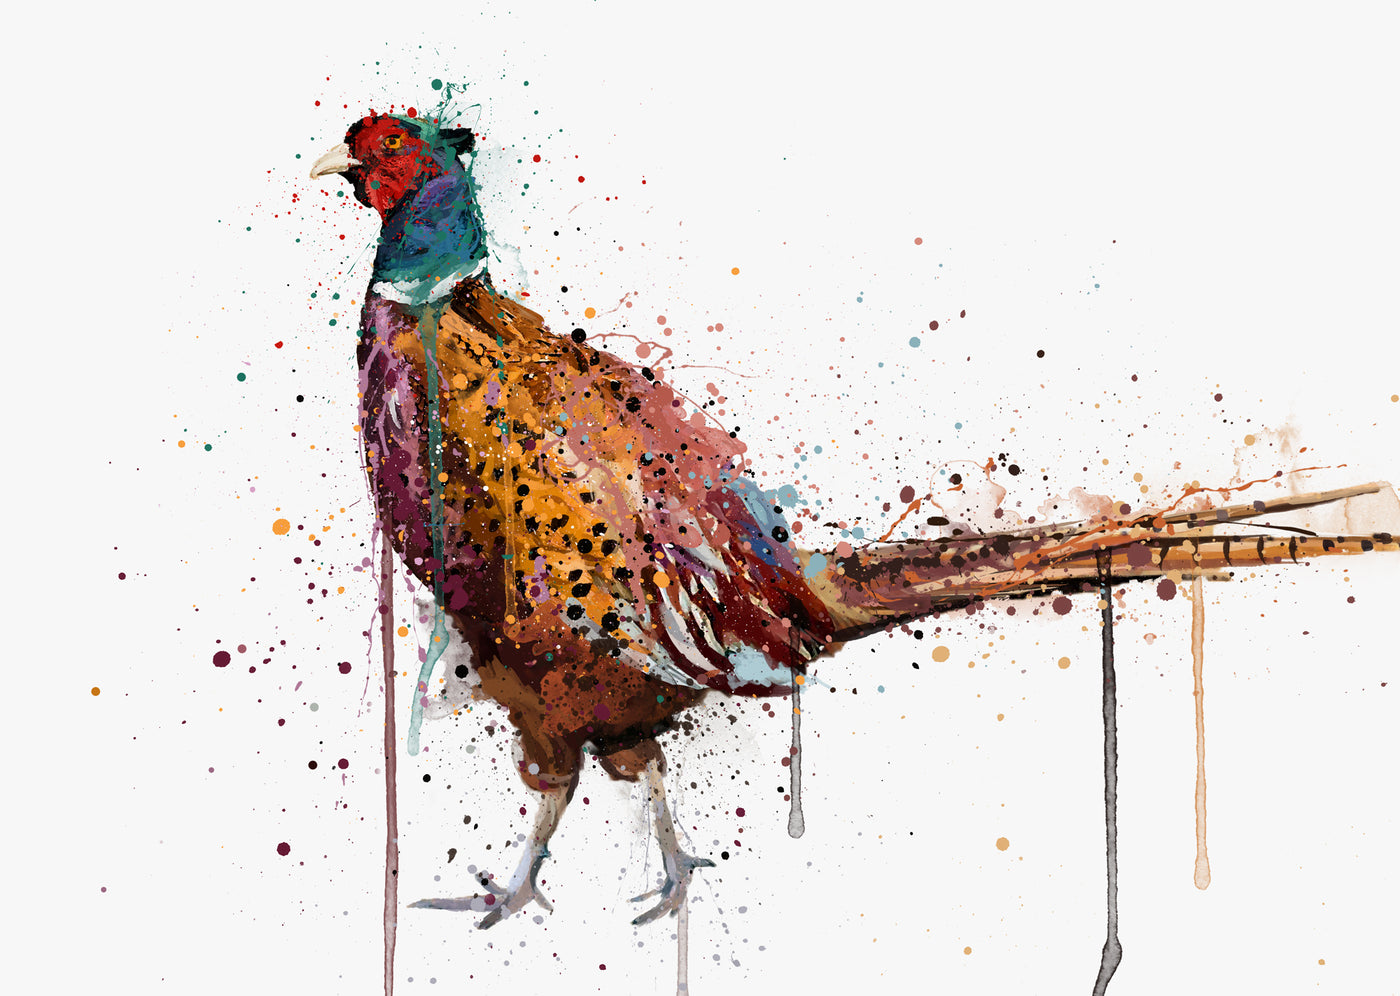 Pheasant Bird Wall Art Print